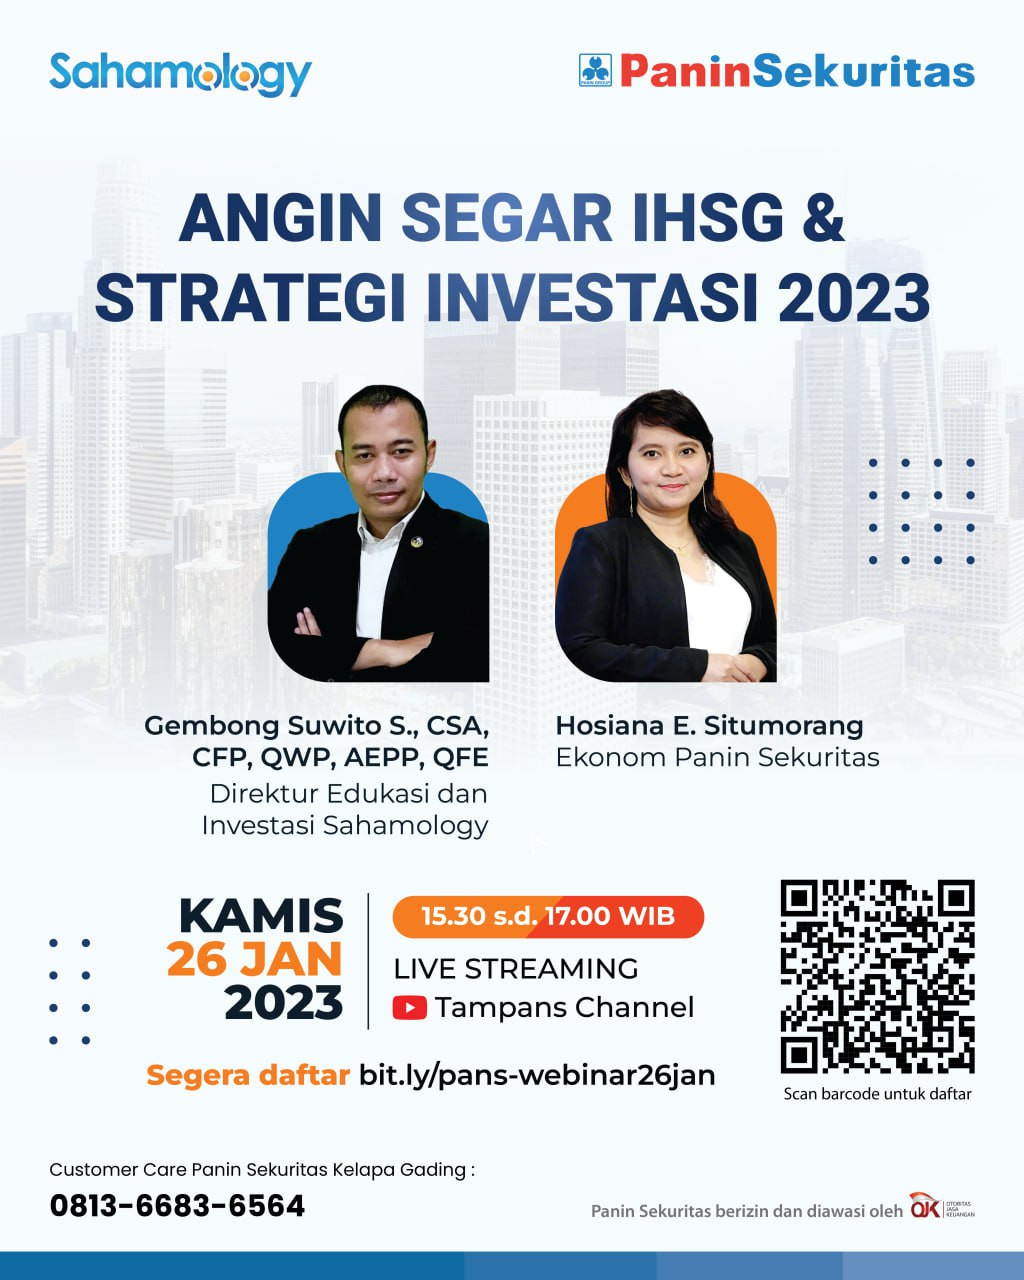 Angin Segar IHSG & Strategi Investasi 2023